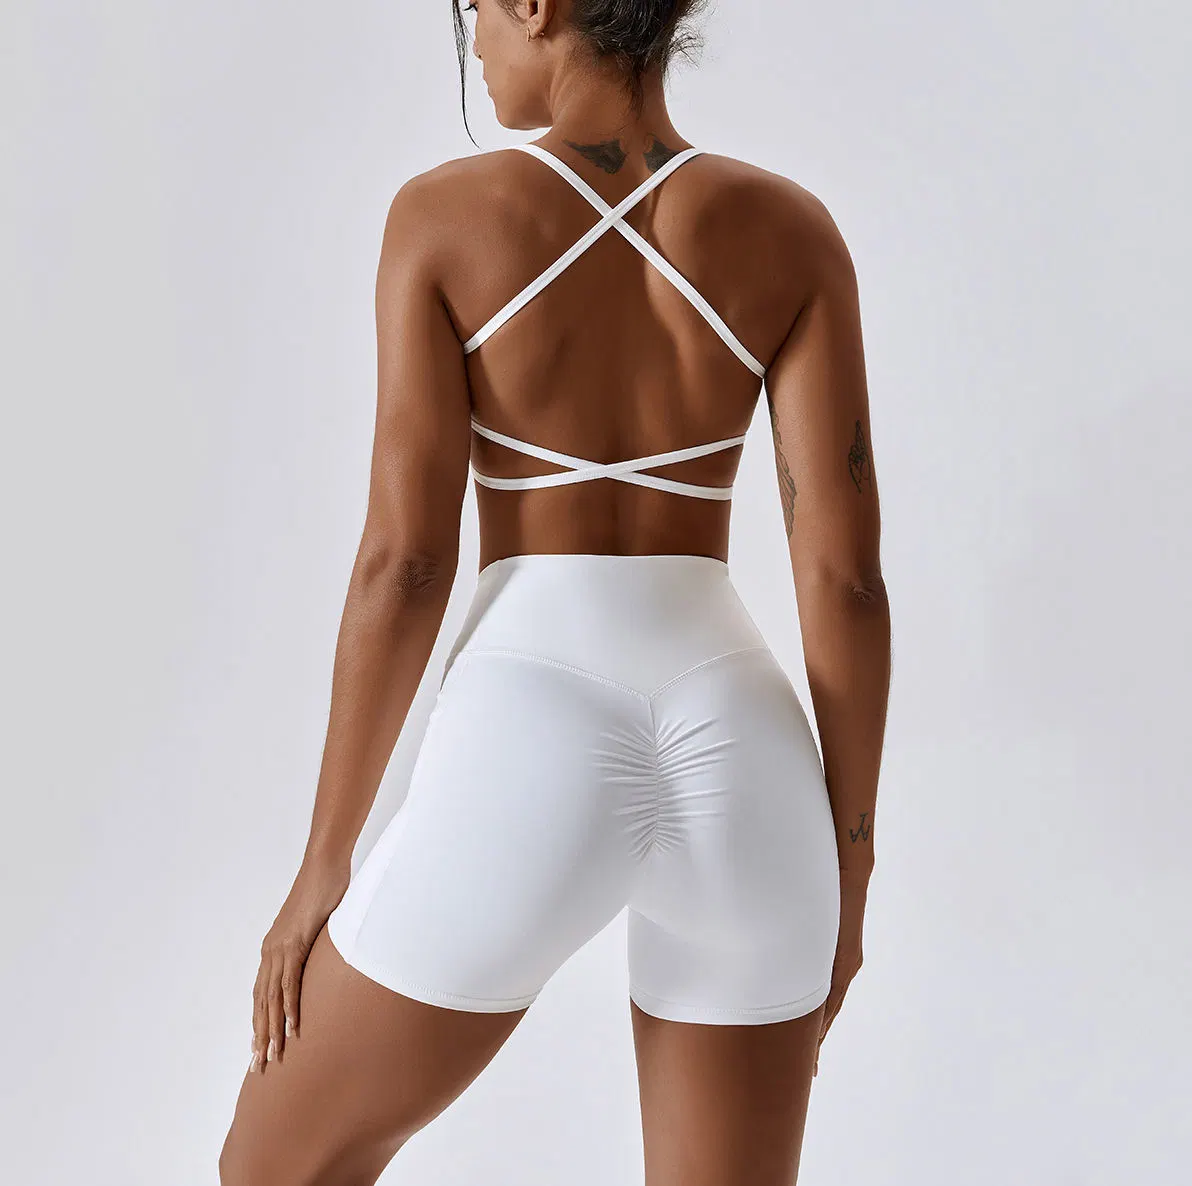 Minghang Garment Sportswear Manufacturer Women Compression Soft Lightweight V Cut Scrunch Back Yoga Shorts Bra Set